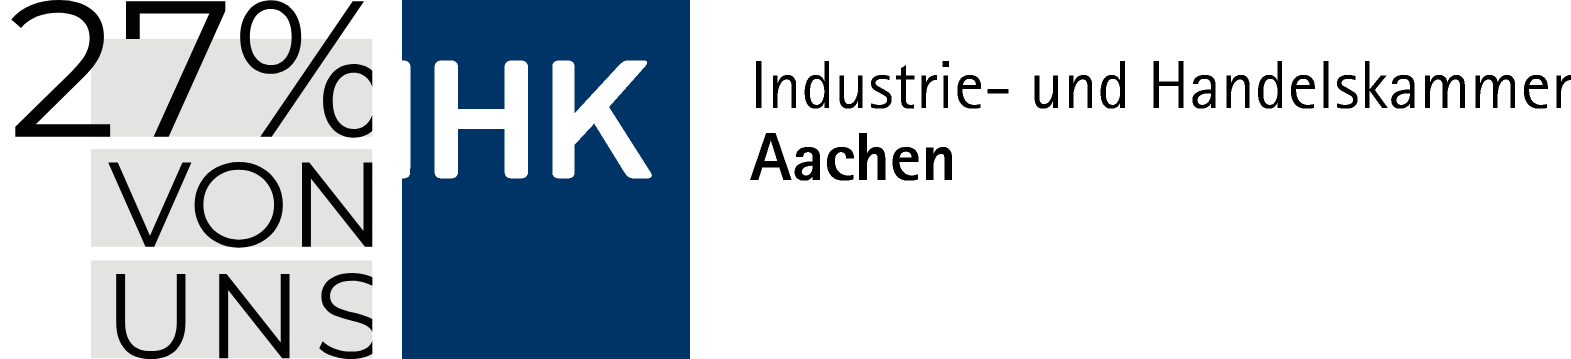 IHK Aachen: Startseite